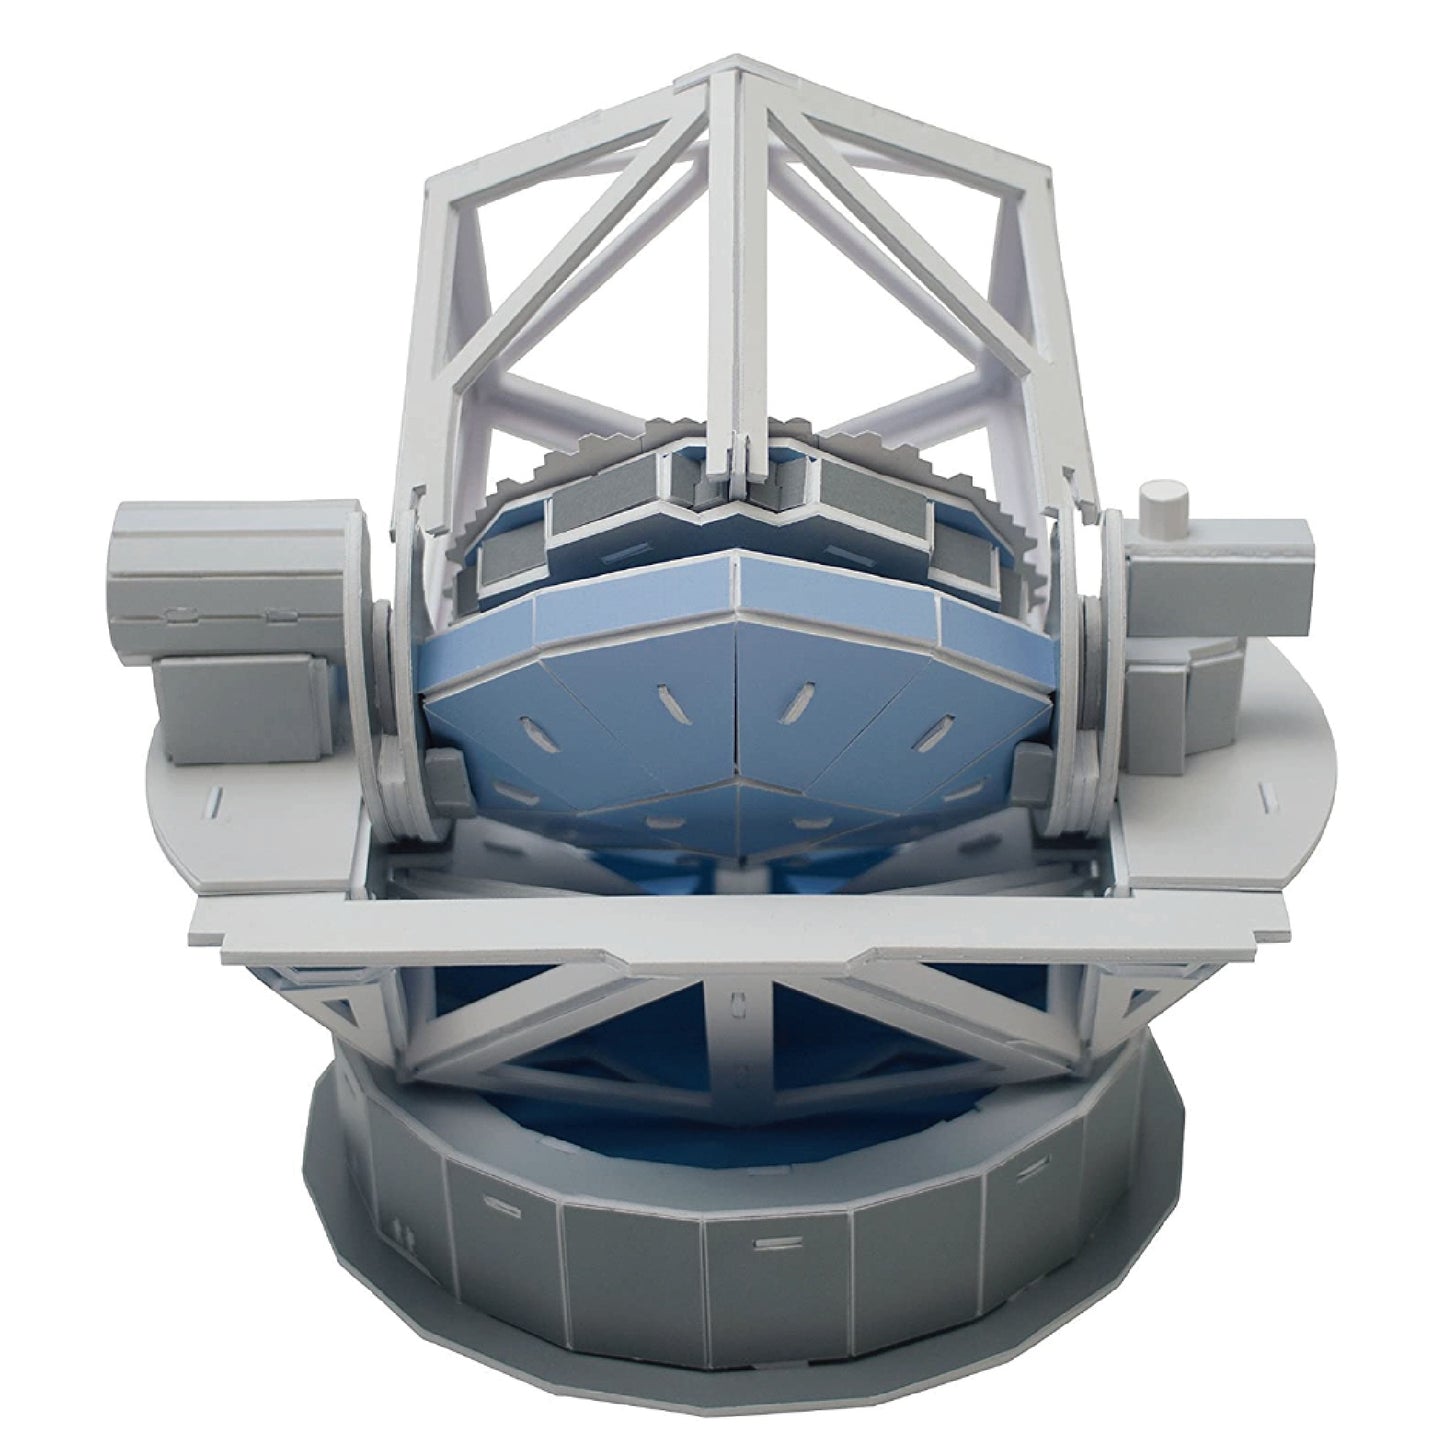  3Dパズル  工作キット 次世代超大型望遠鏡TMT 04